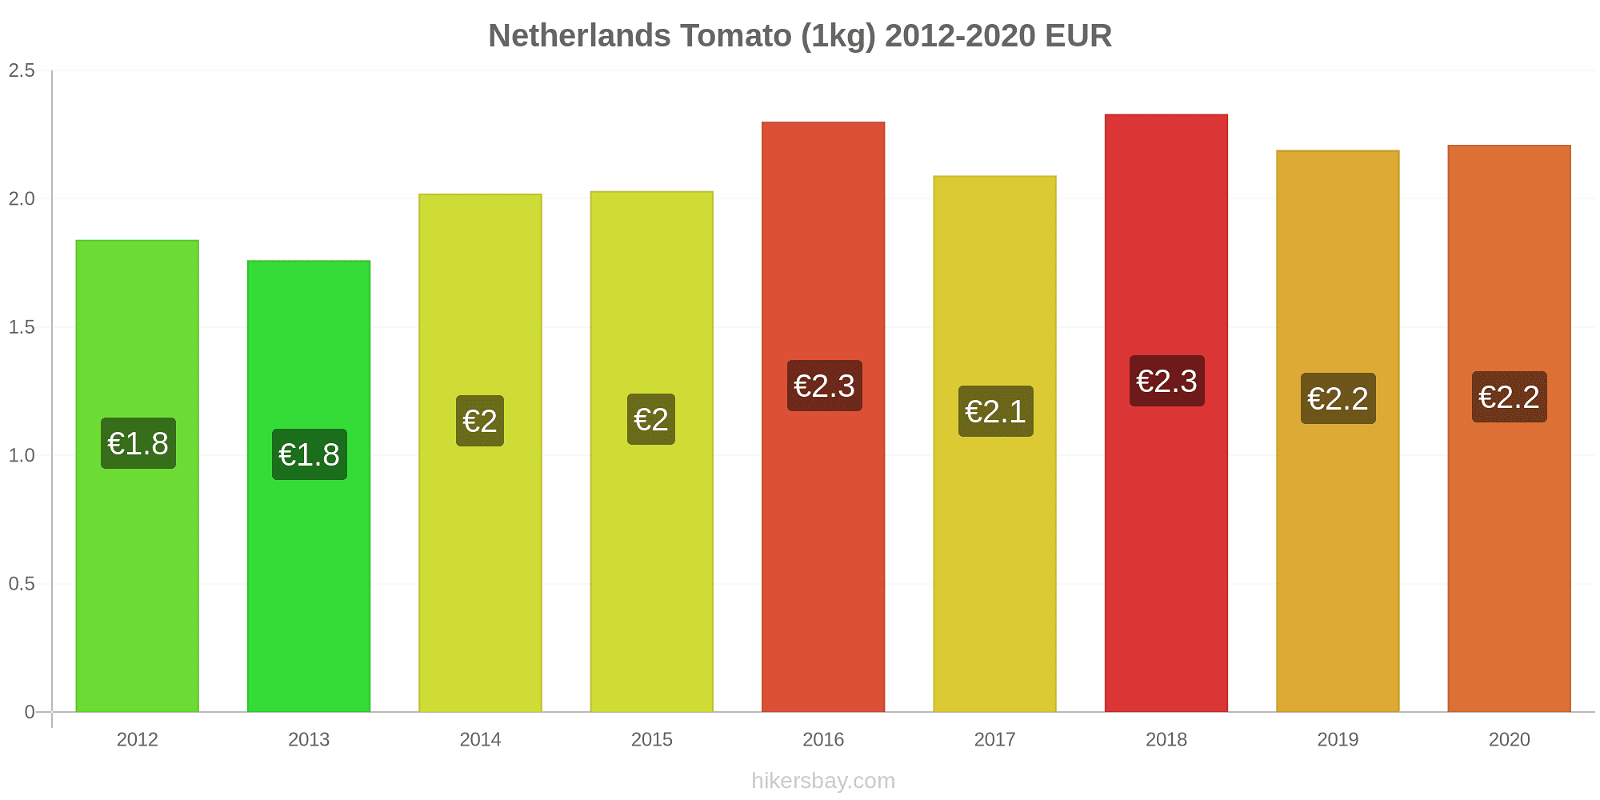 Netherlands price changes Tomato (1kg) hikersbay.com